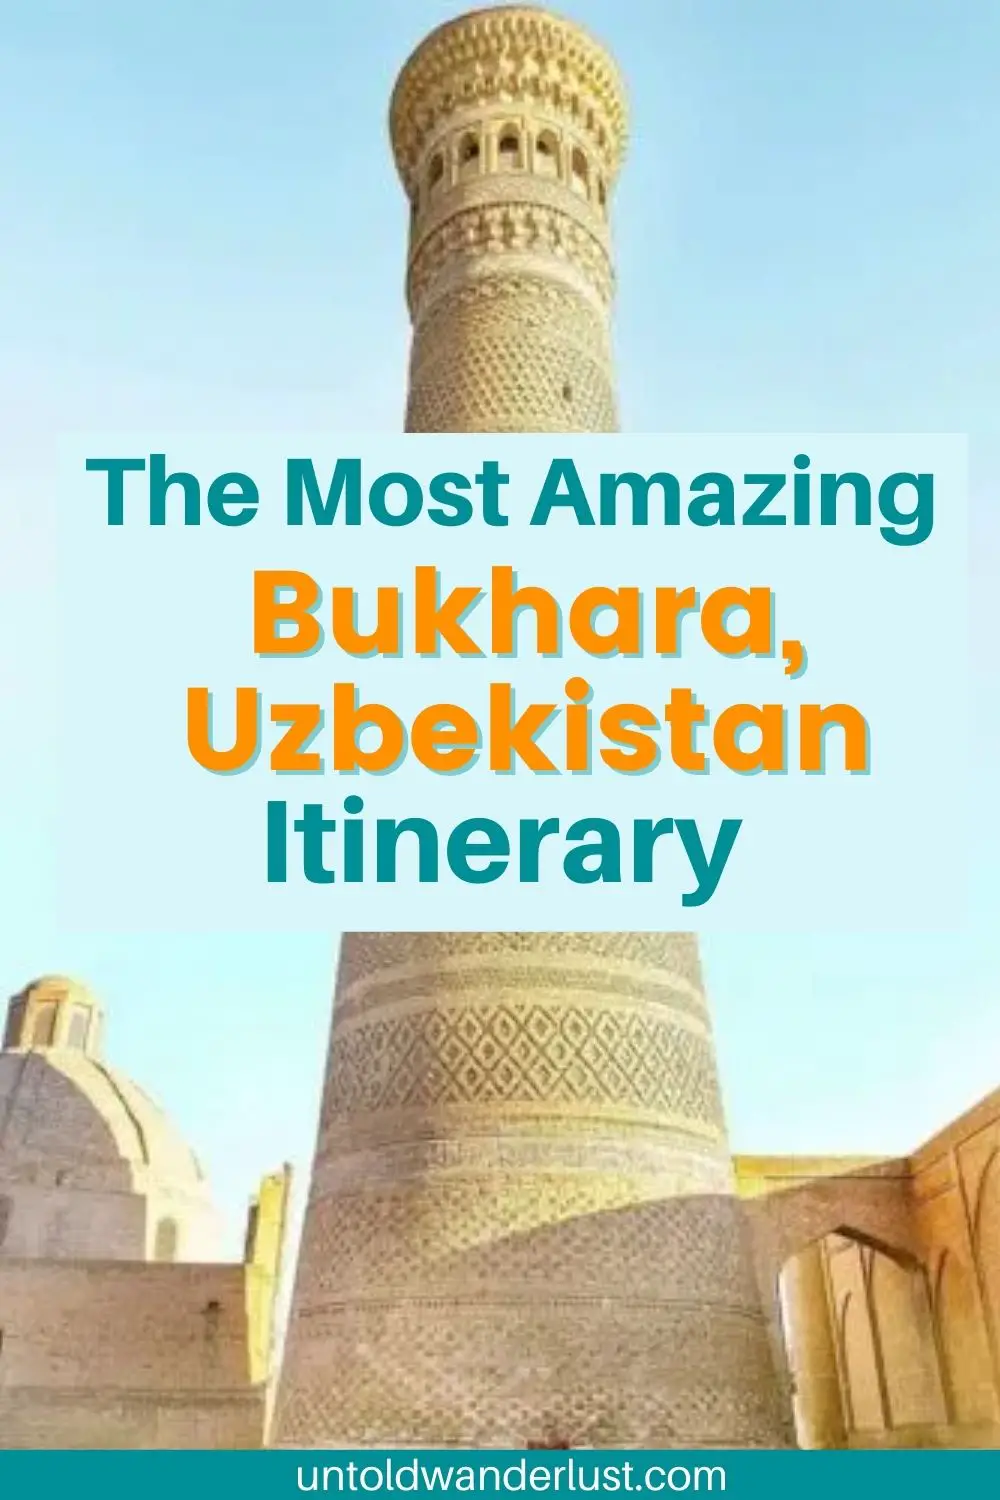 The Ultimate Bukhara, Uzbekistan Itinerary